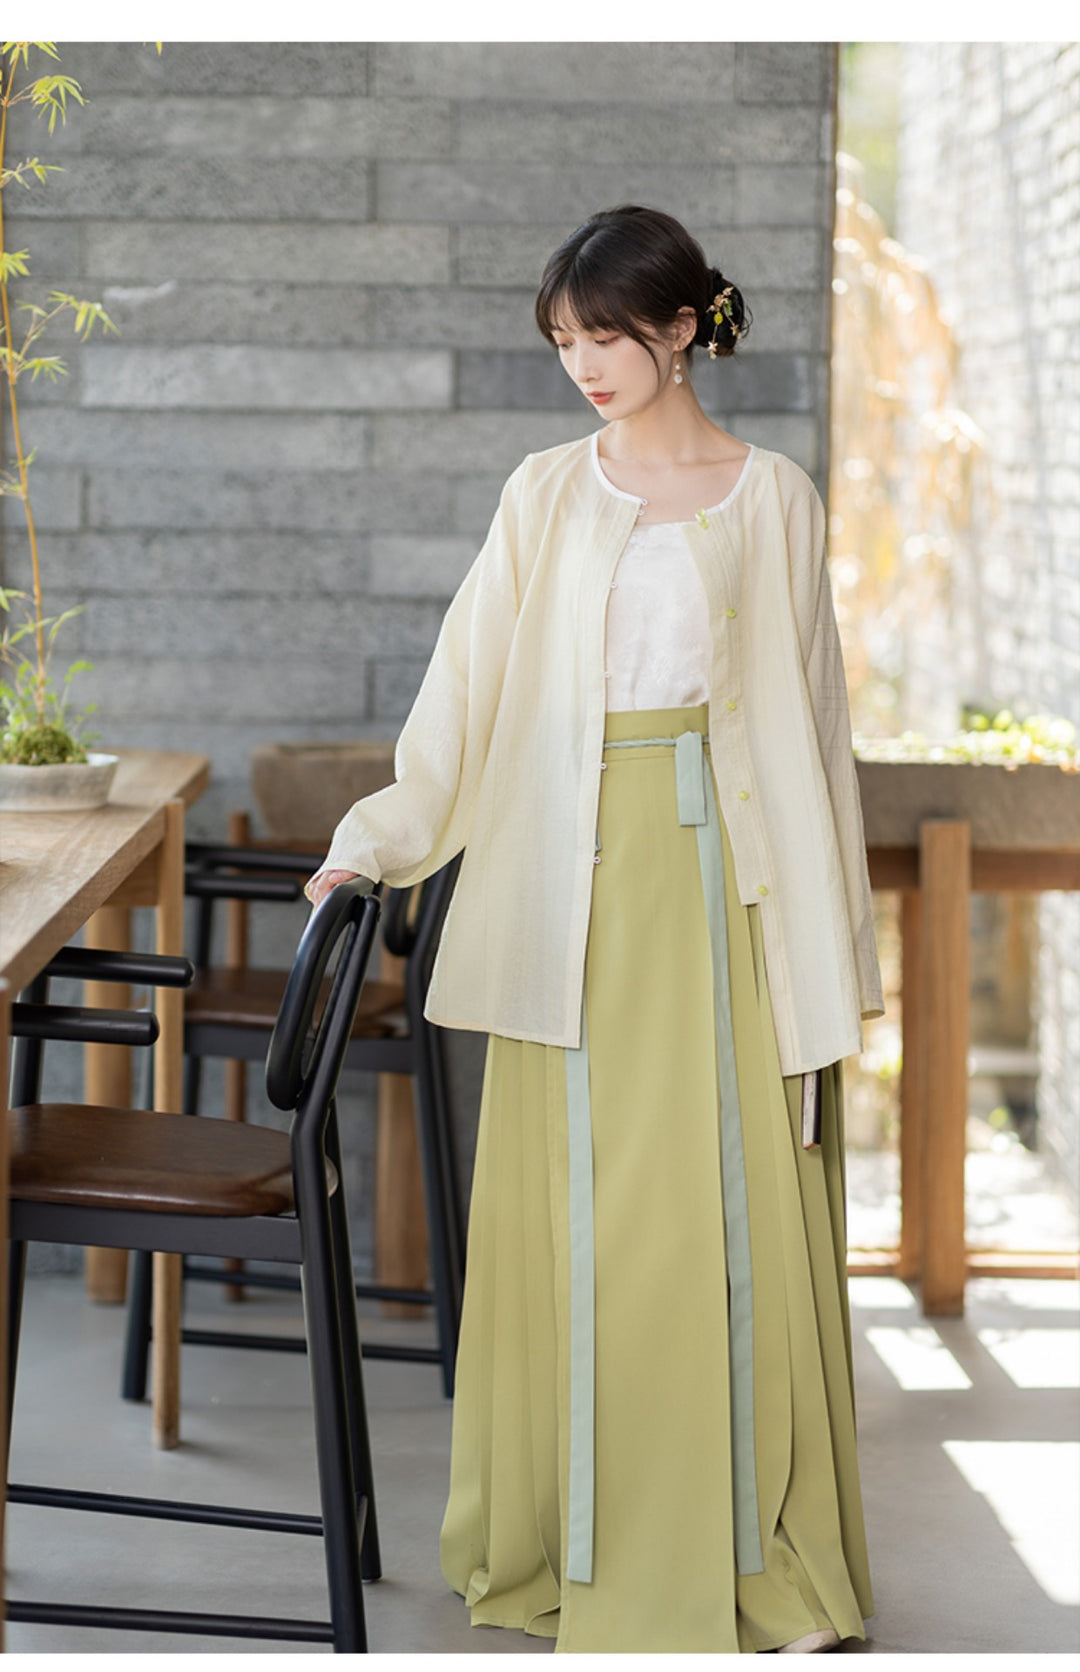 Chixia~Pick Up Fireflies~Spring Han Lolita Outfits short blouse+horse face skirt S 